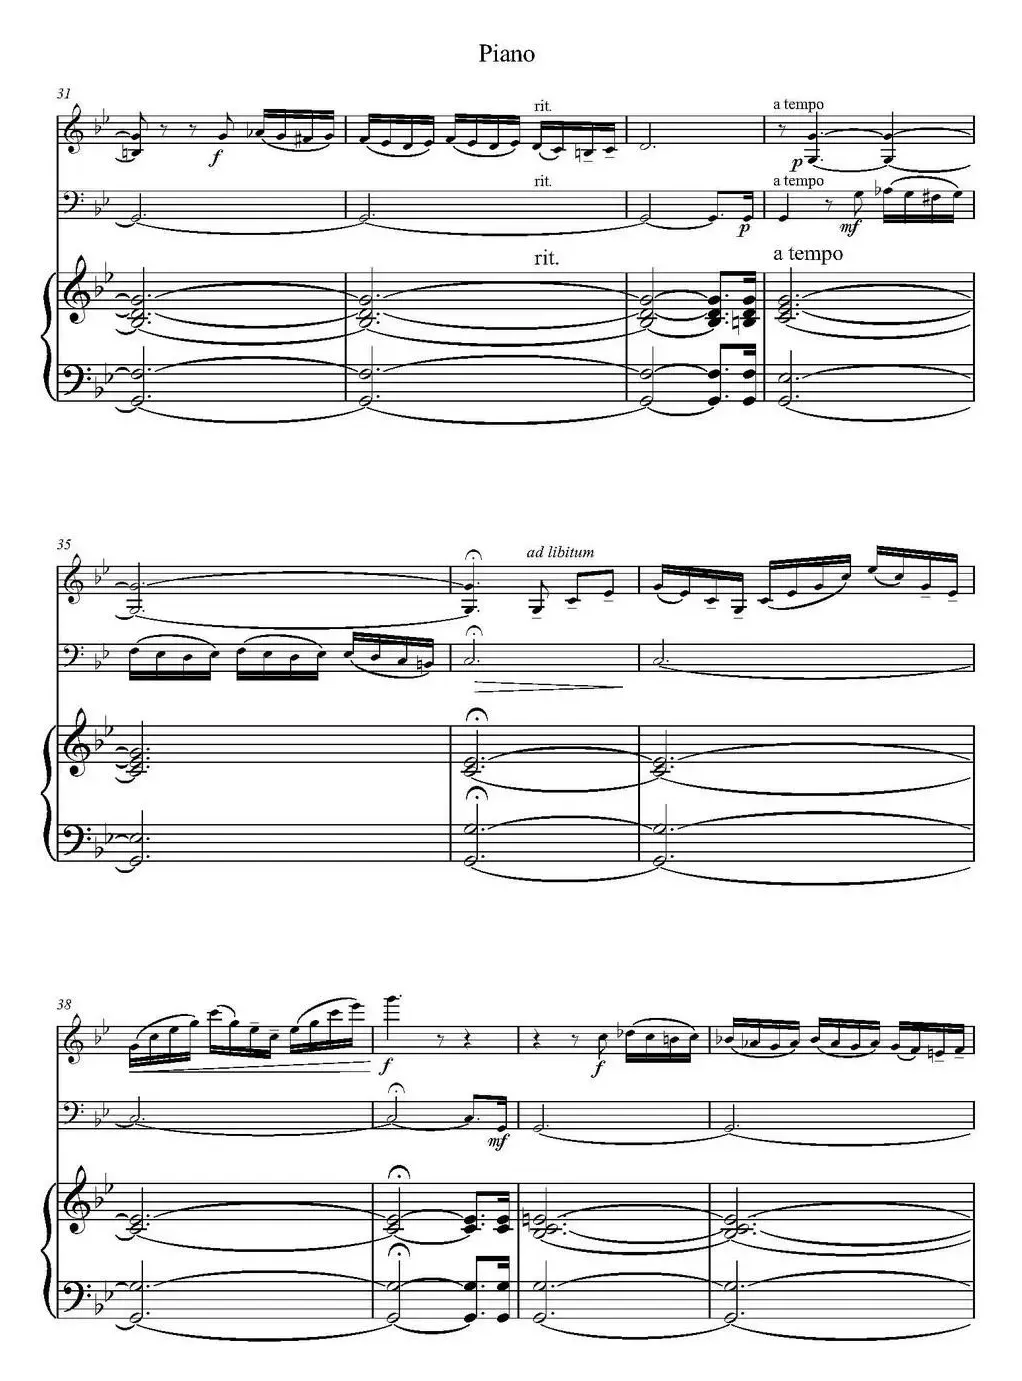 Adagio（小提琴+大提琴+钢琴伴奏、T.Albinoni作曲版）